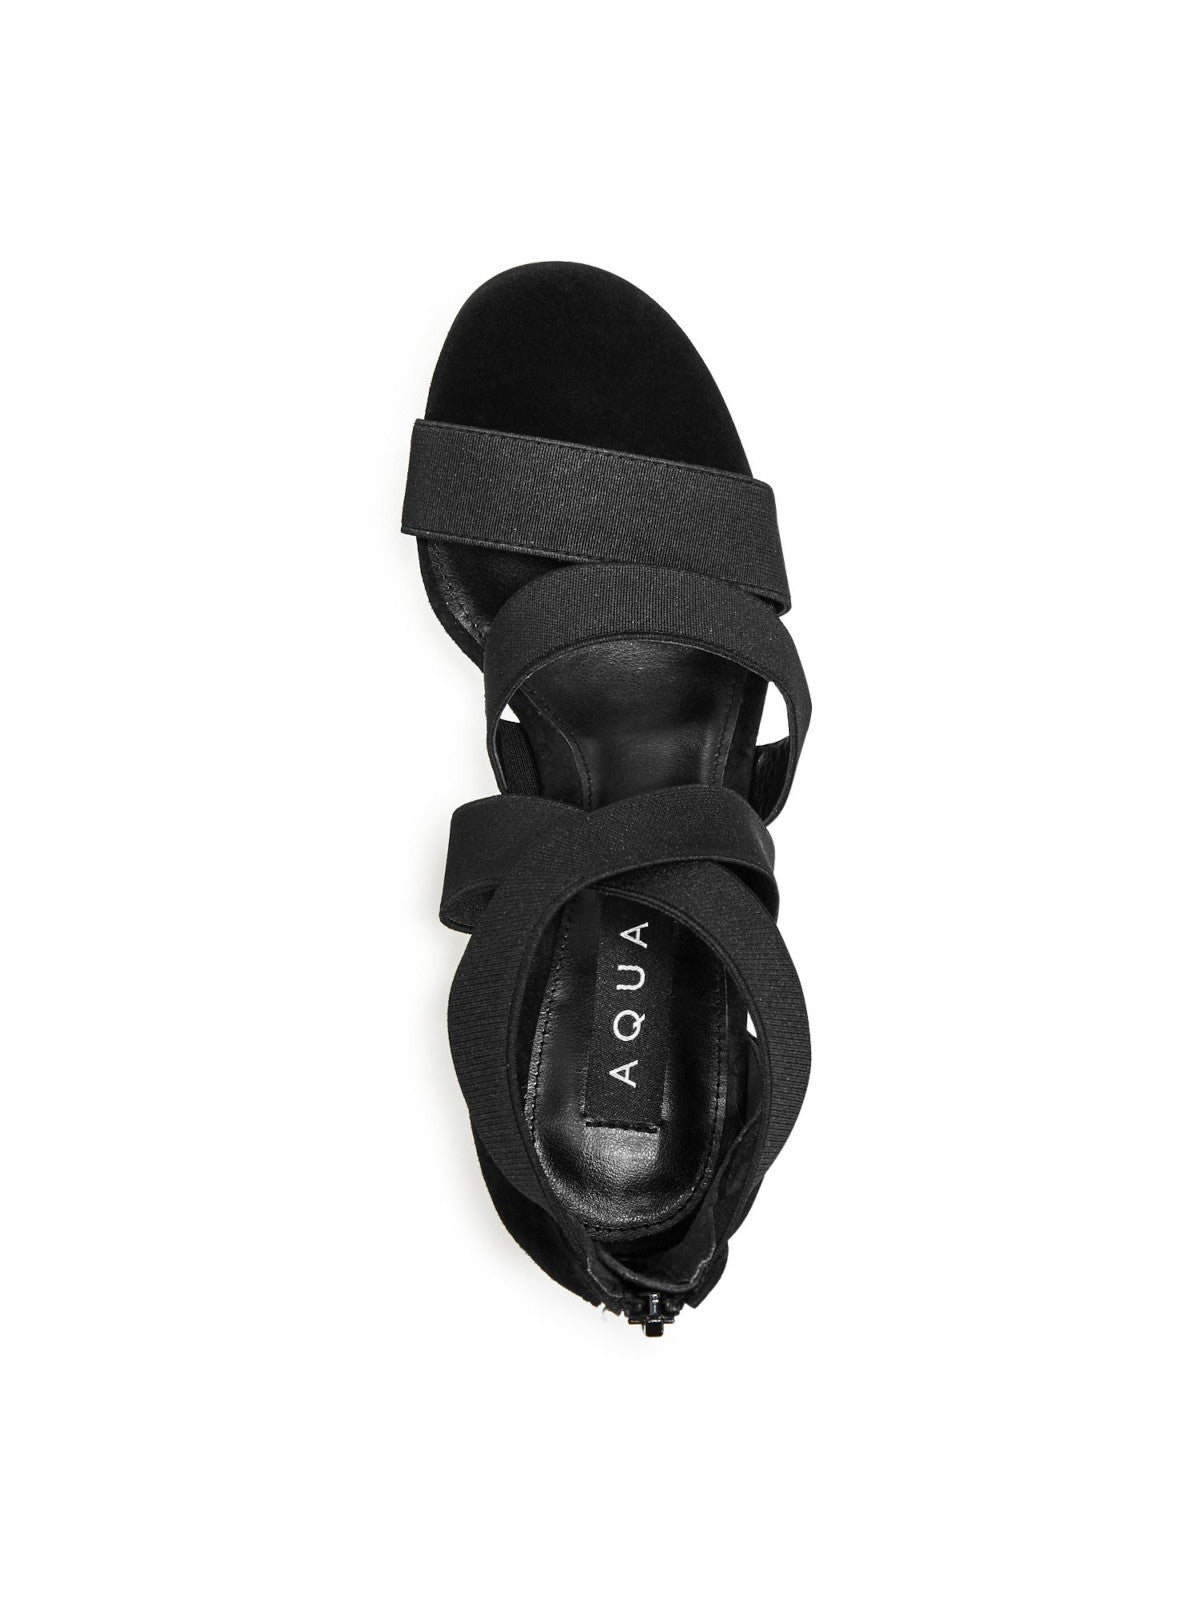 AQUA Womens Black Crisscross Straps Strappy Padded Frenz Round Toe Block Heel Zip-Up Suede Heeled Gladiator Sandal 6 M